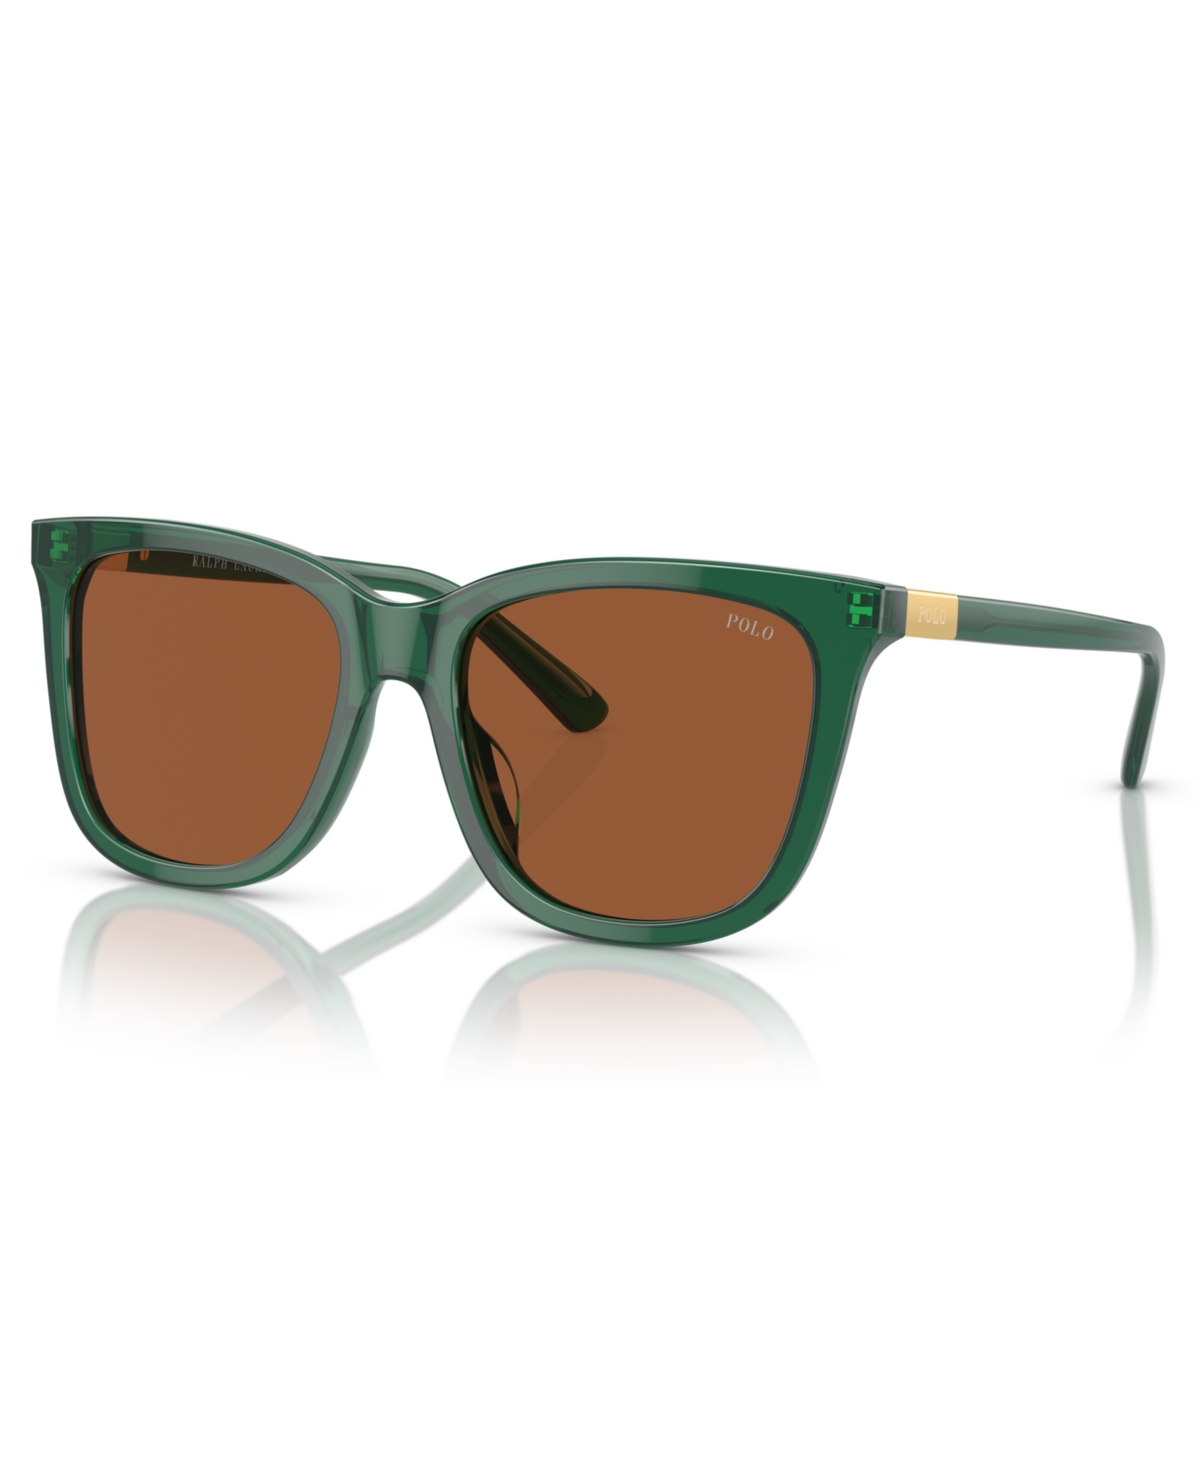 Polo Ralph Lauren Women's Sunglasses, Ph4201u In Shiny Transparent Green